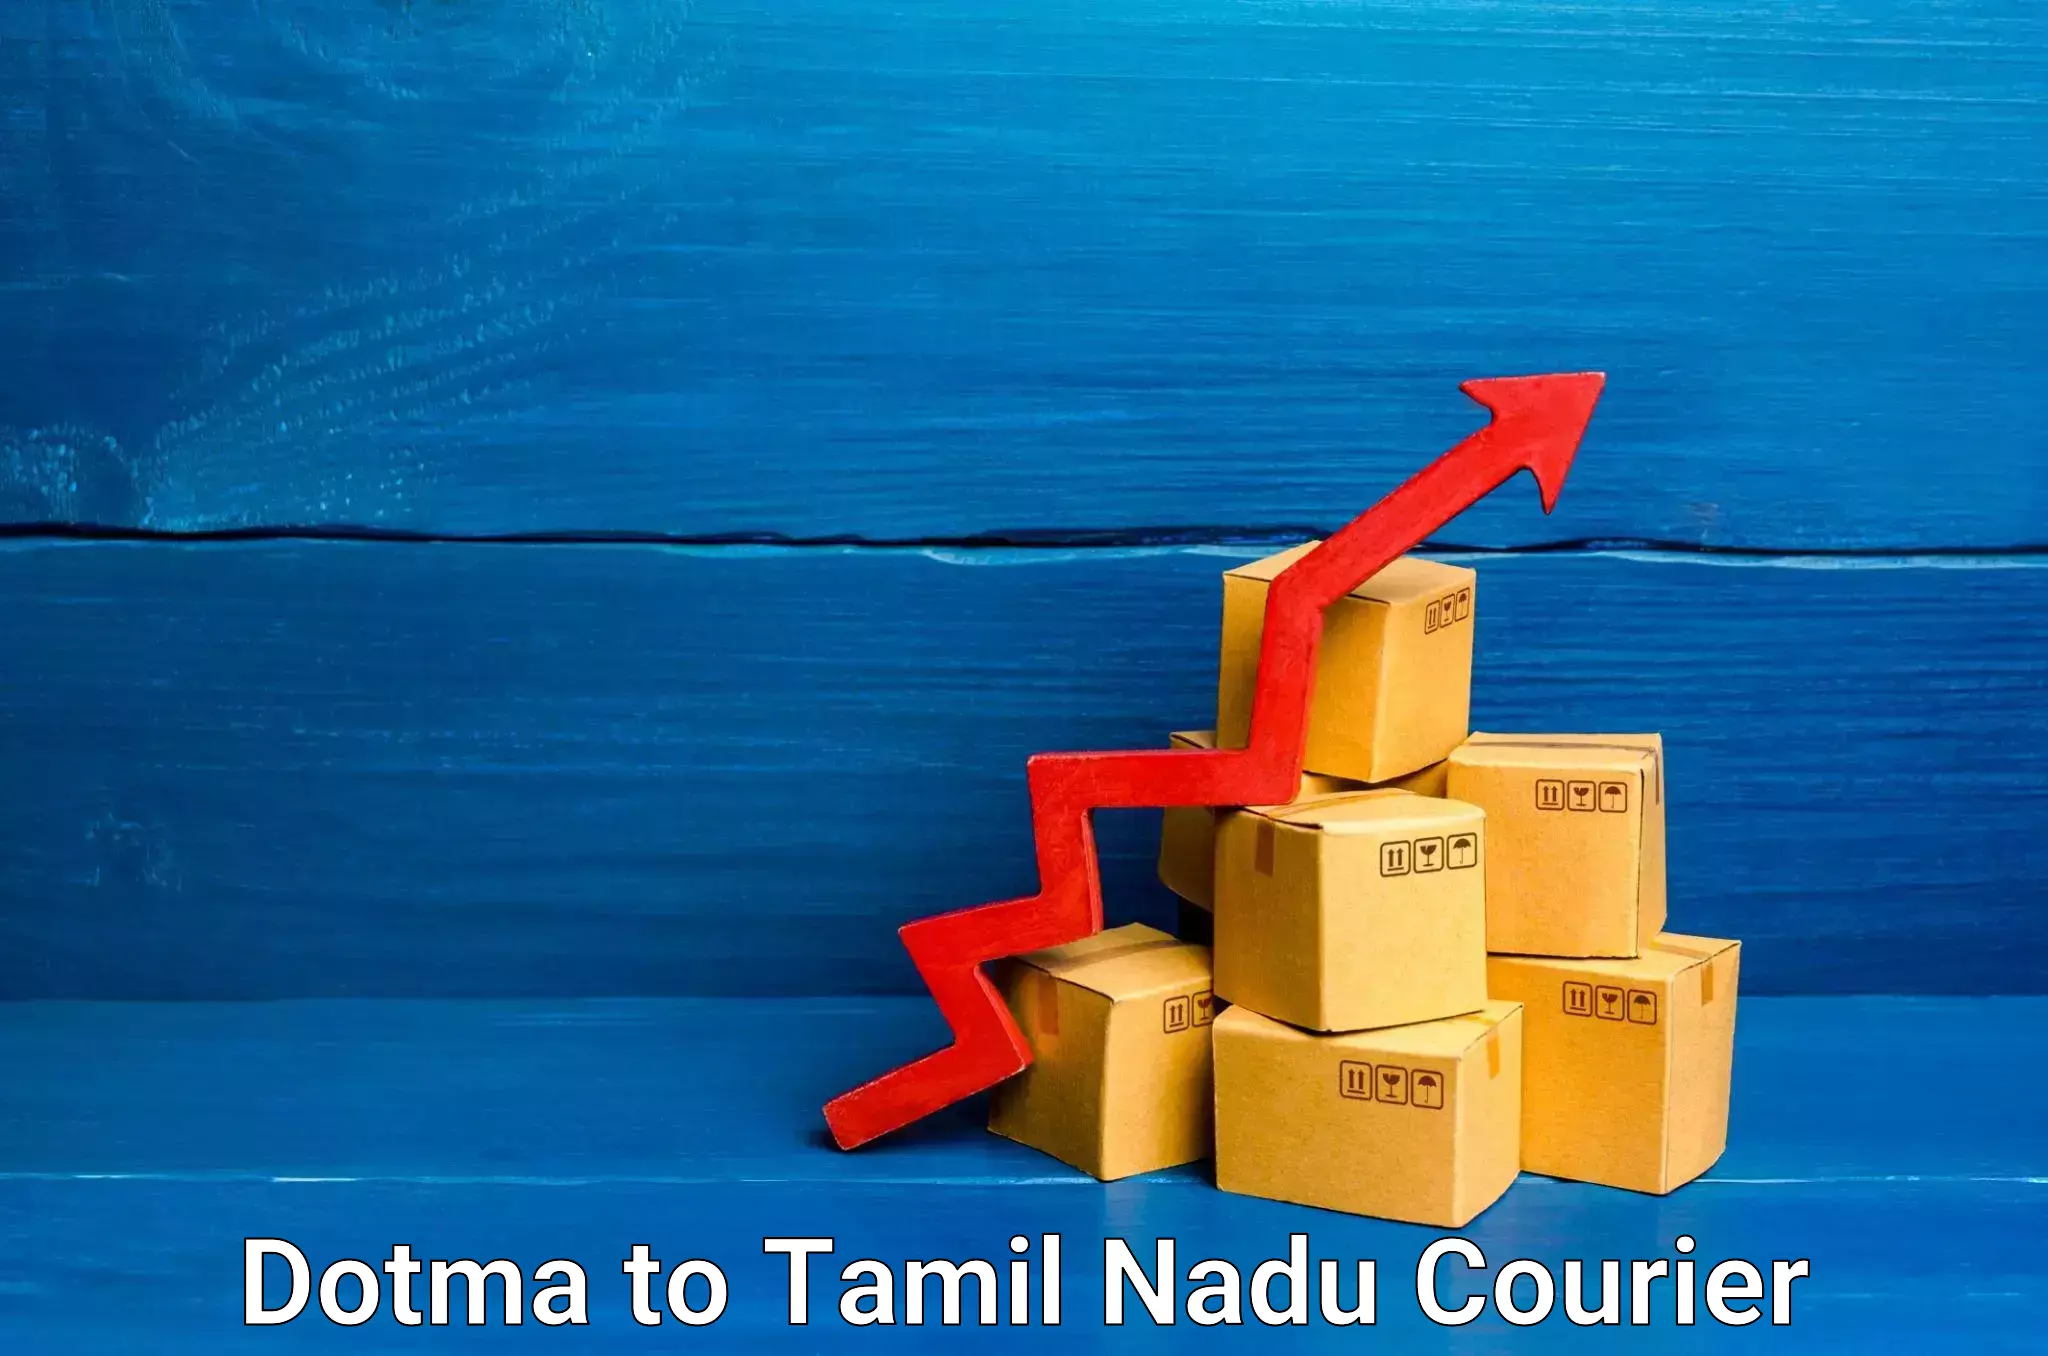 Specialized shipment handling Dotma to Tamil Nadu